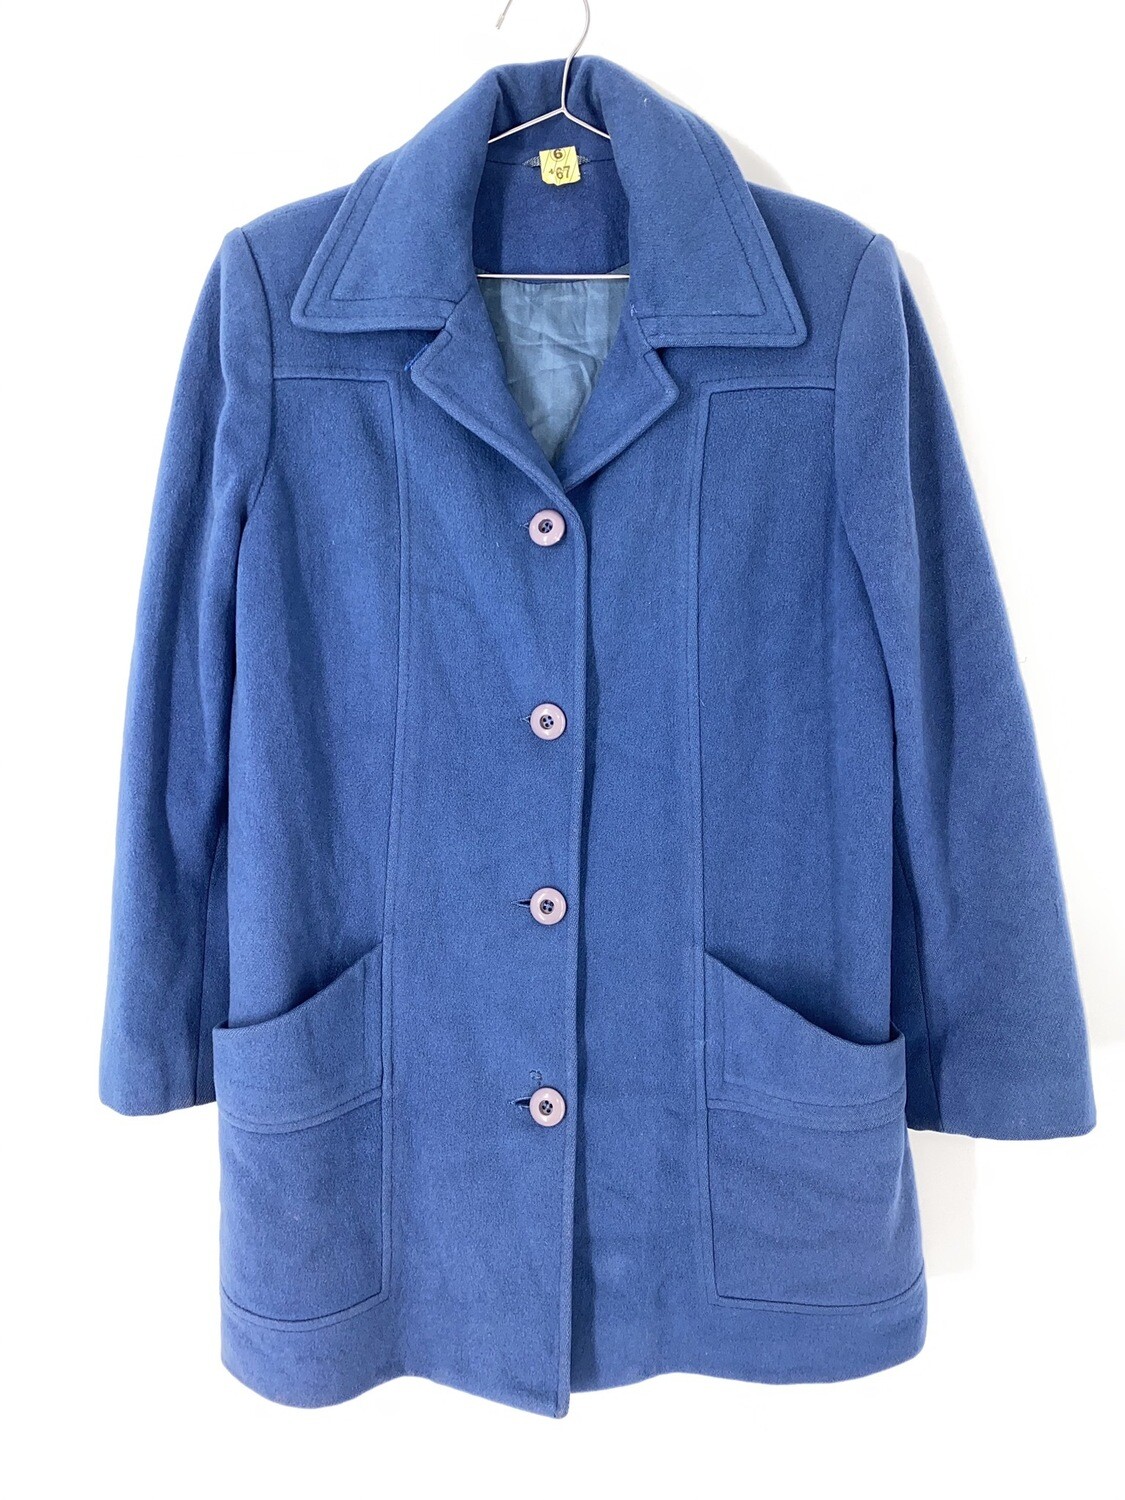 Soft Blue Mid Length Coat Size M